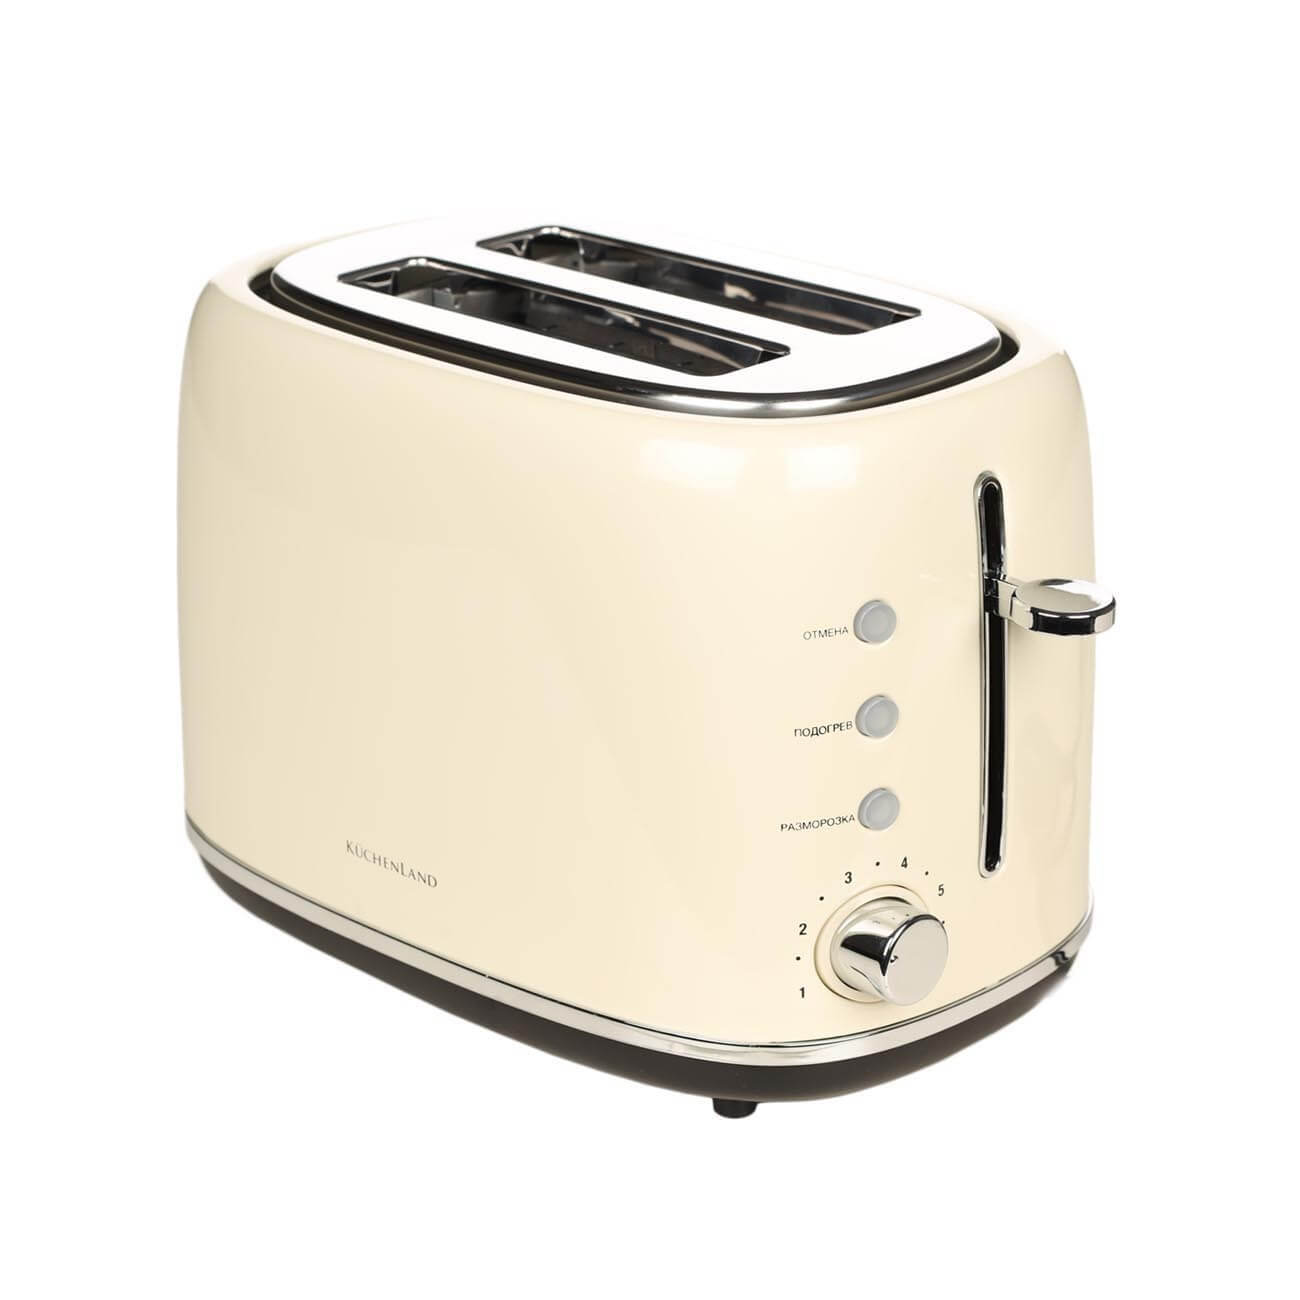 Тостер электрический, 730-870 Вт, 6 режимов, сталь/пластик, бежевый, Vintage kitchen тостер ariete 155 03 vintage beige